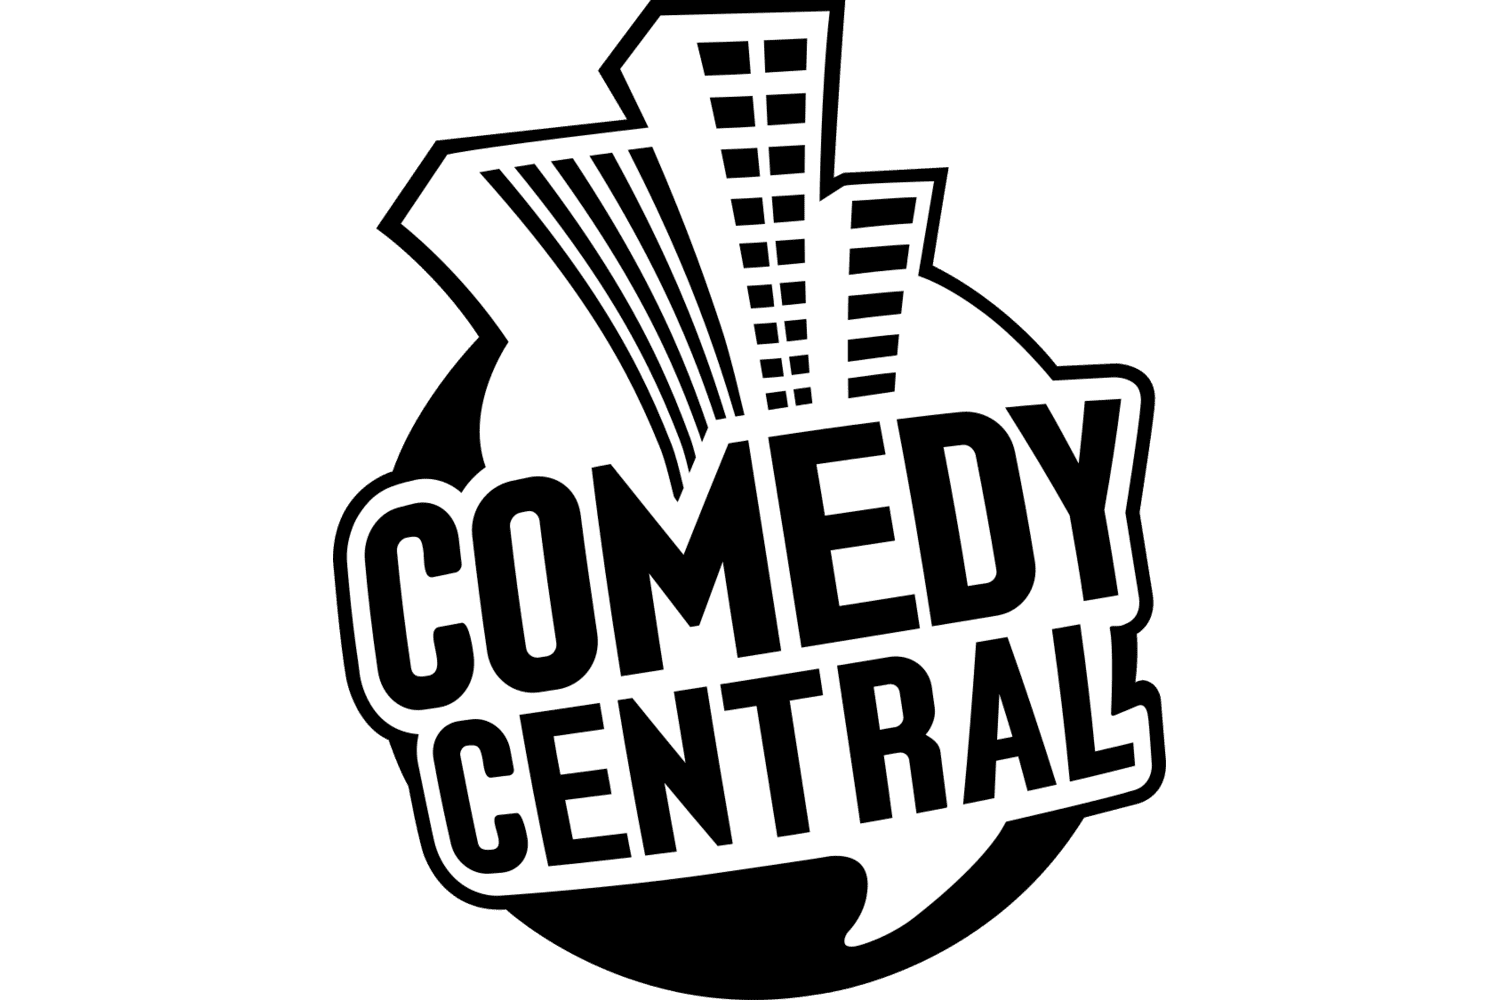 comedy central logo png transparent